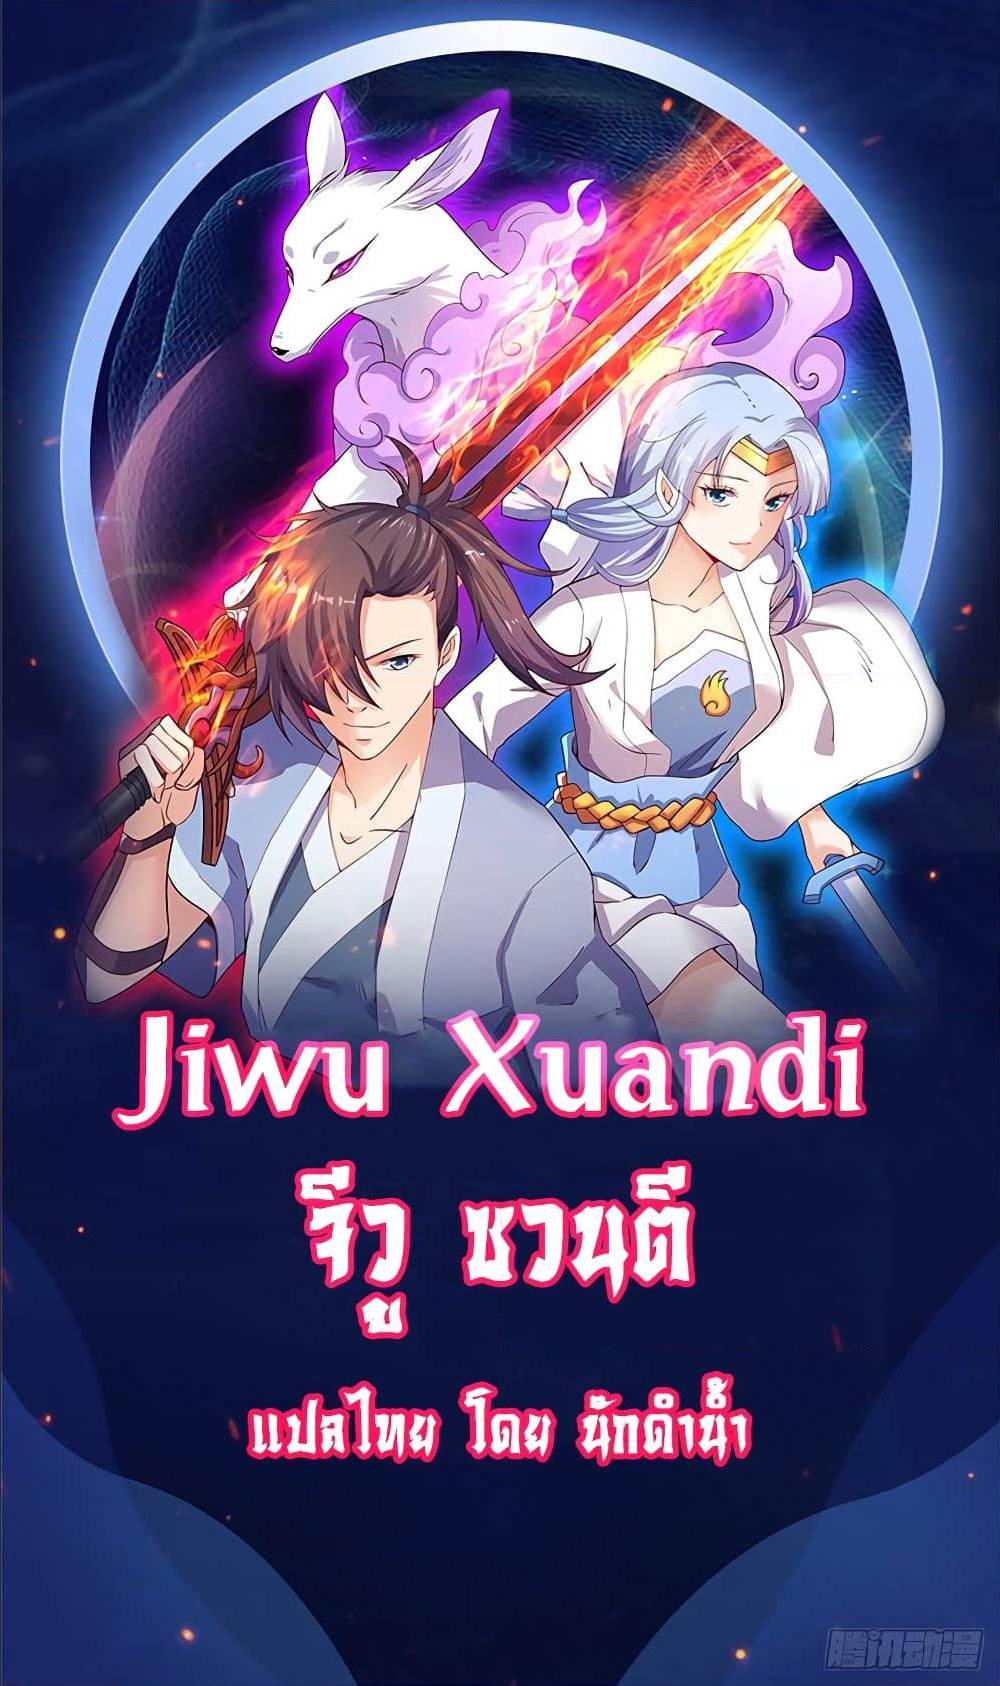 Jiwu Xuandi 46 (1)